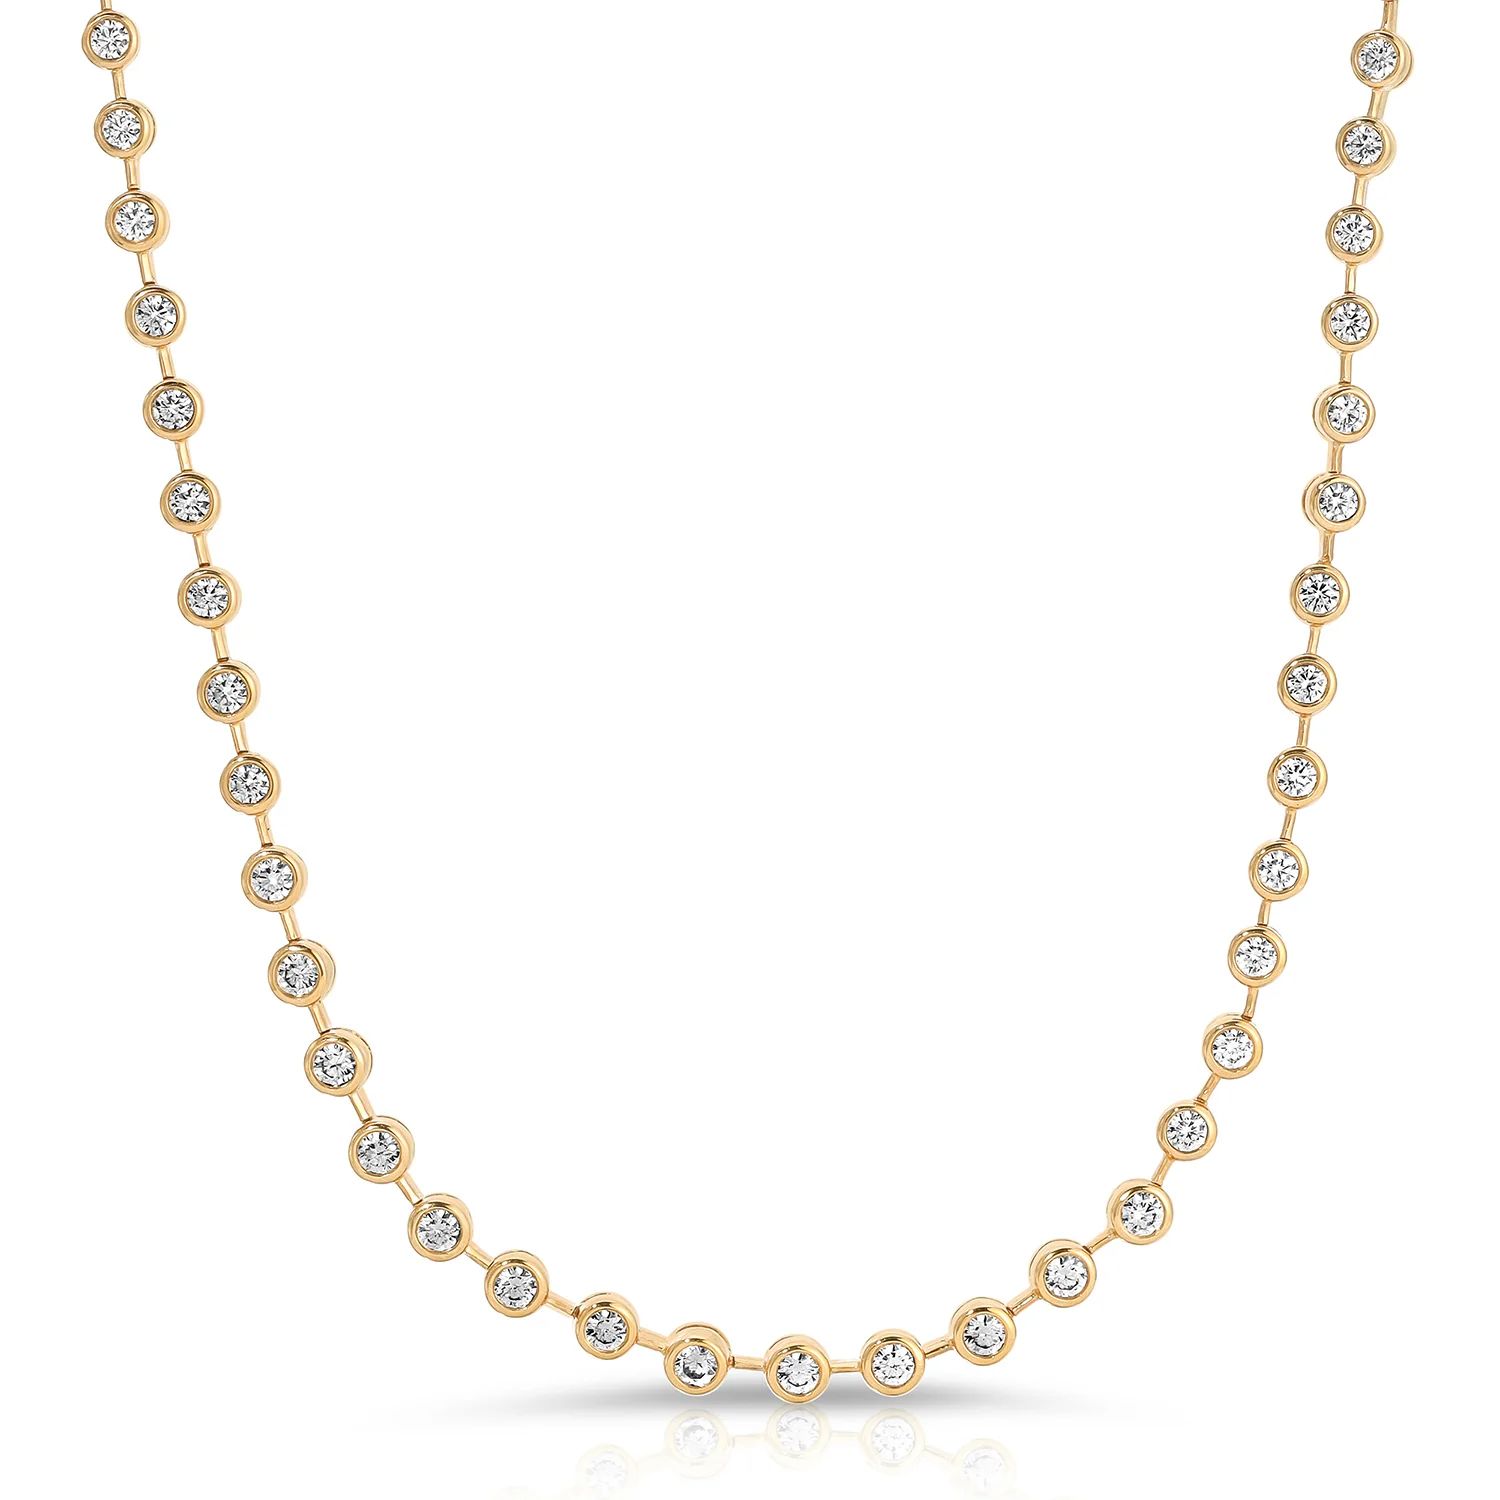 The Ultimate Diamond Necklace | Maya Brenner